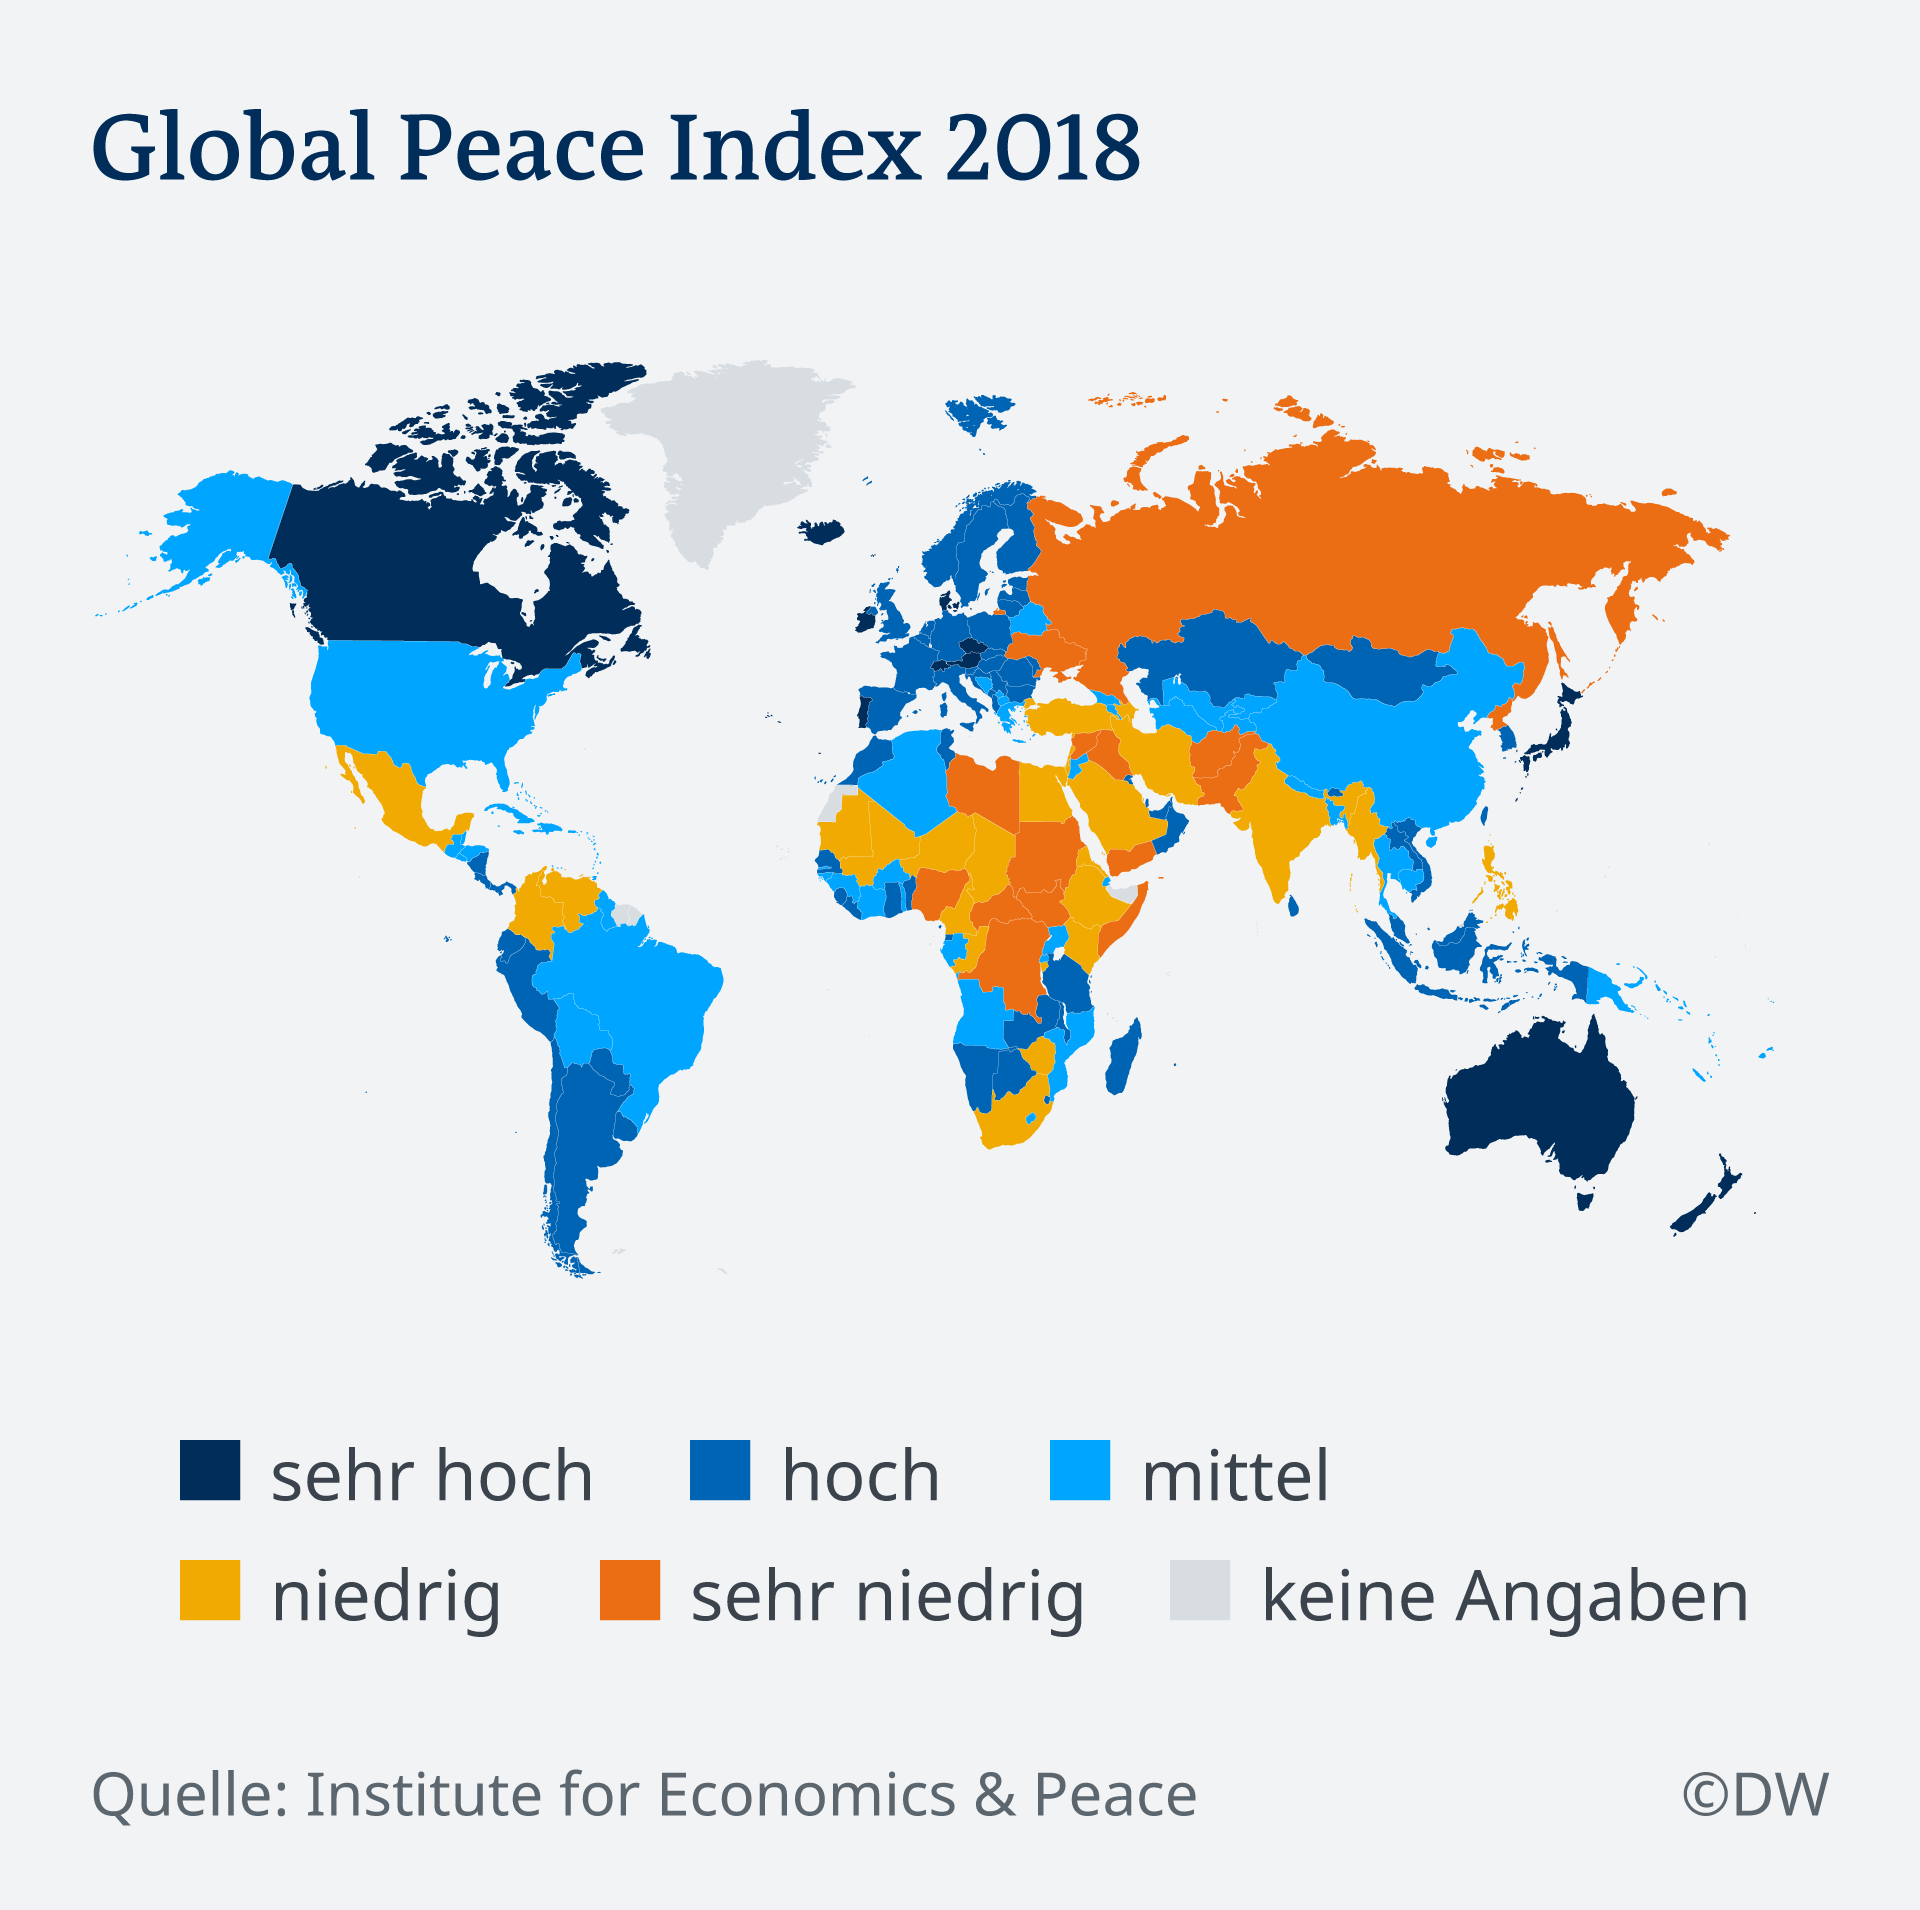 global city power index 2018